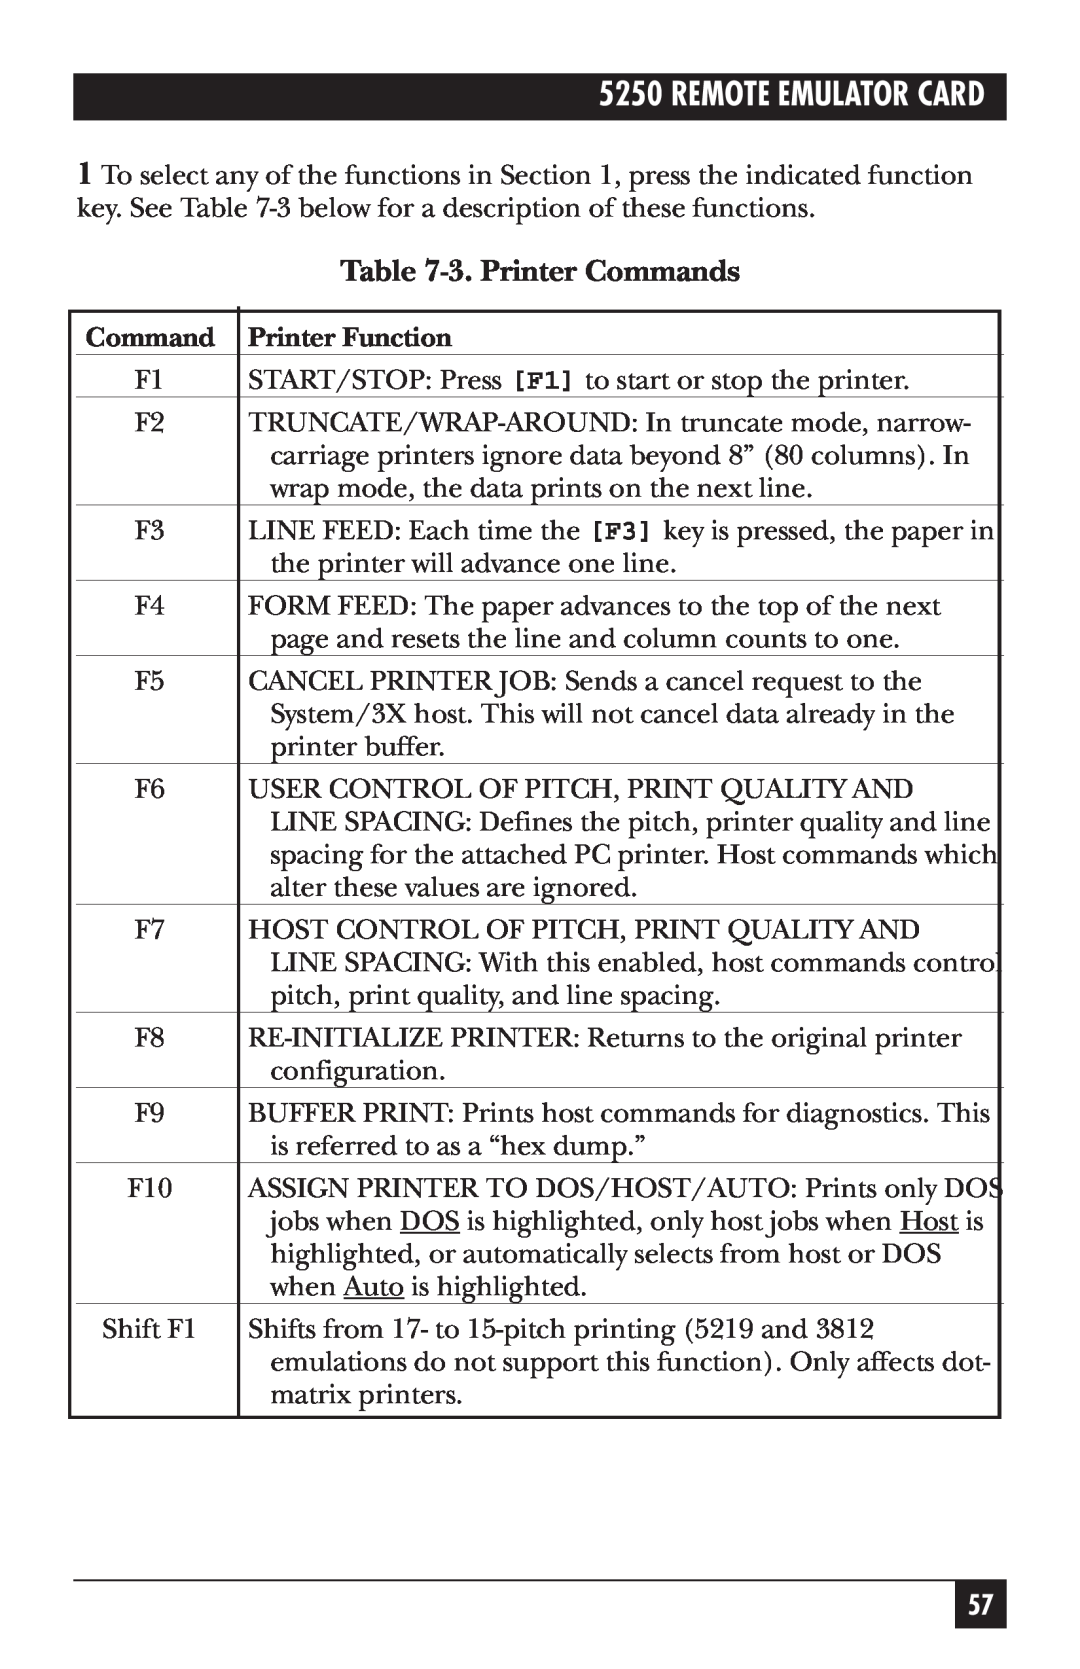 Black Box Remote Emulator Card, 5250 manual 3.Printer Commands, Printer Function 